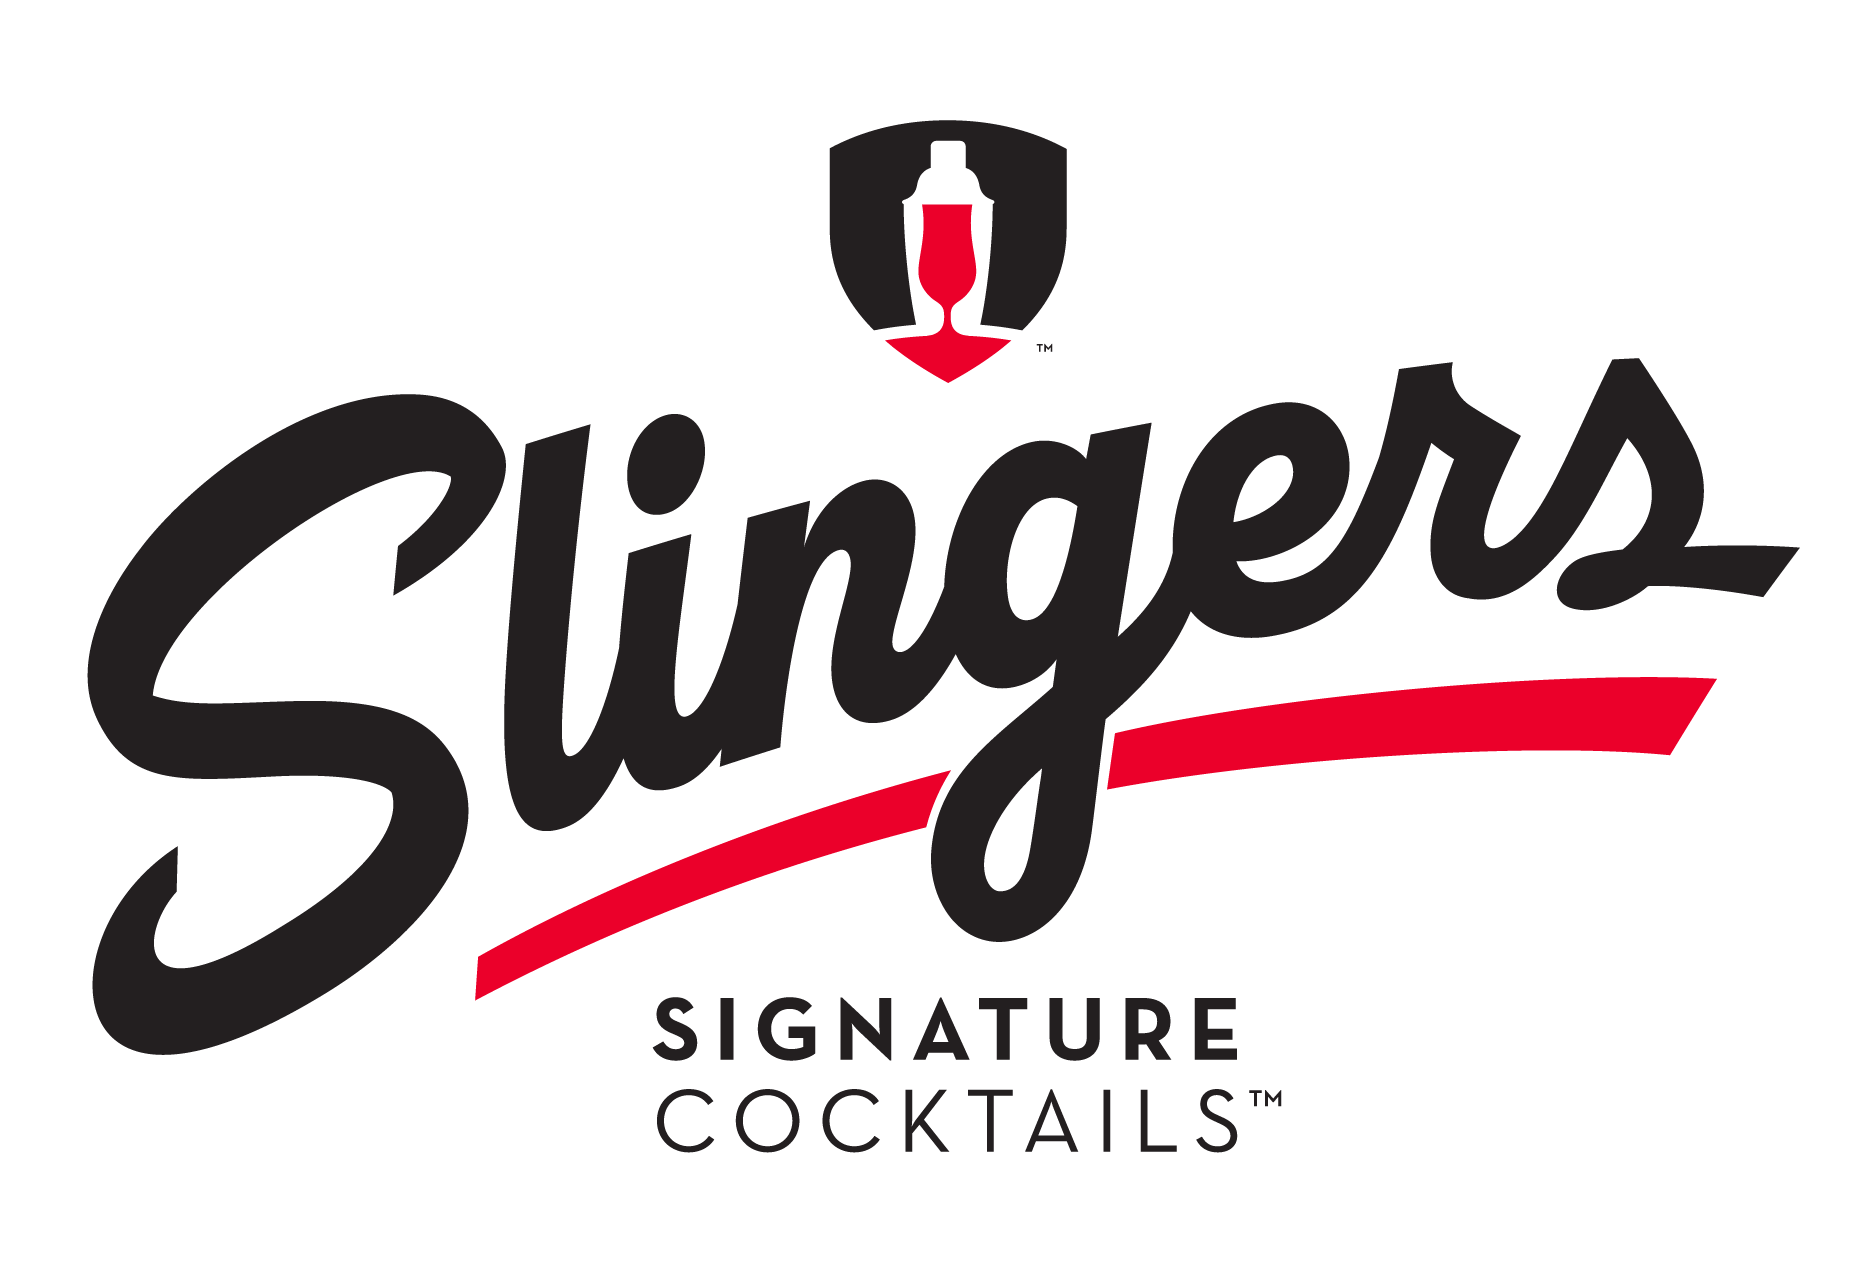 波士顿啤酒公司推出的Slingers Signature Cocktails™